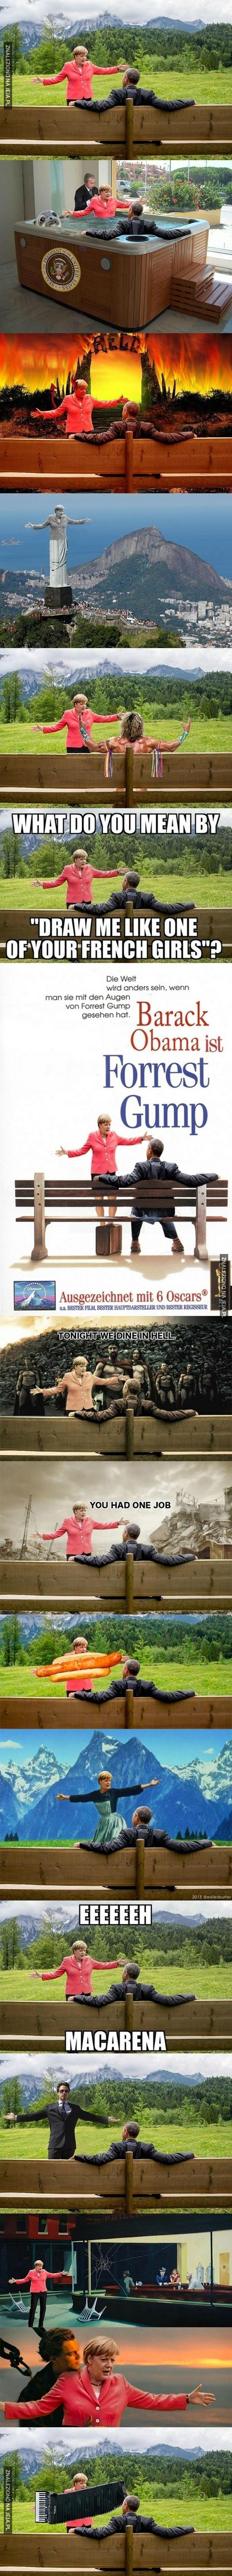 Merkel & Obama